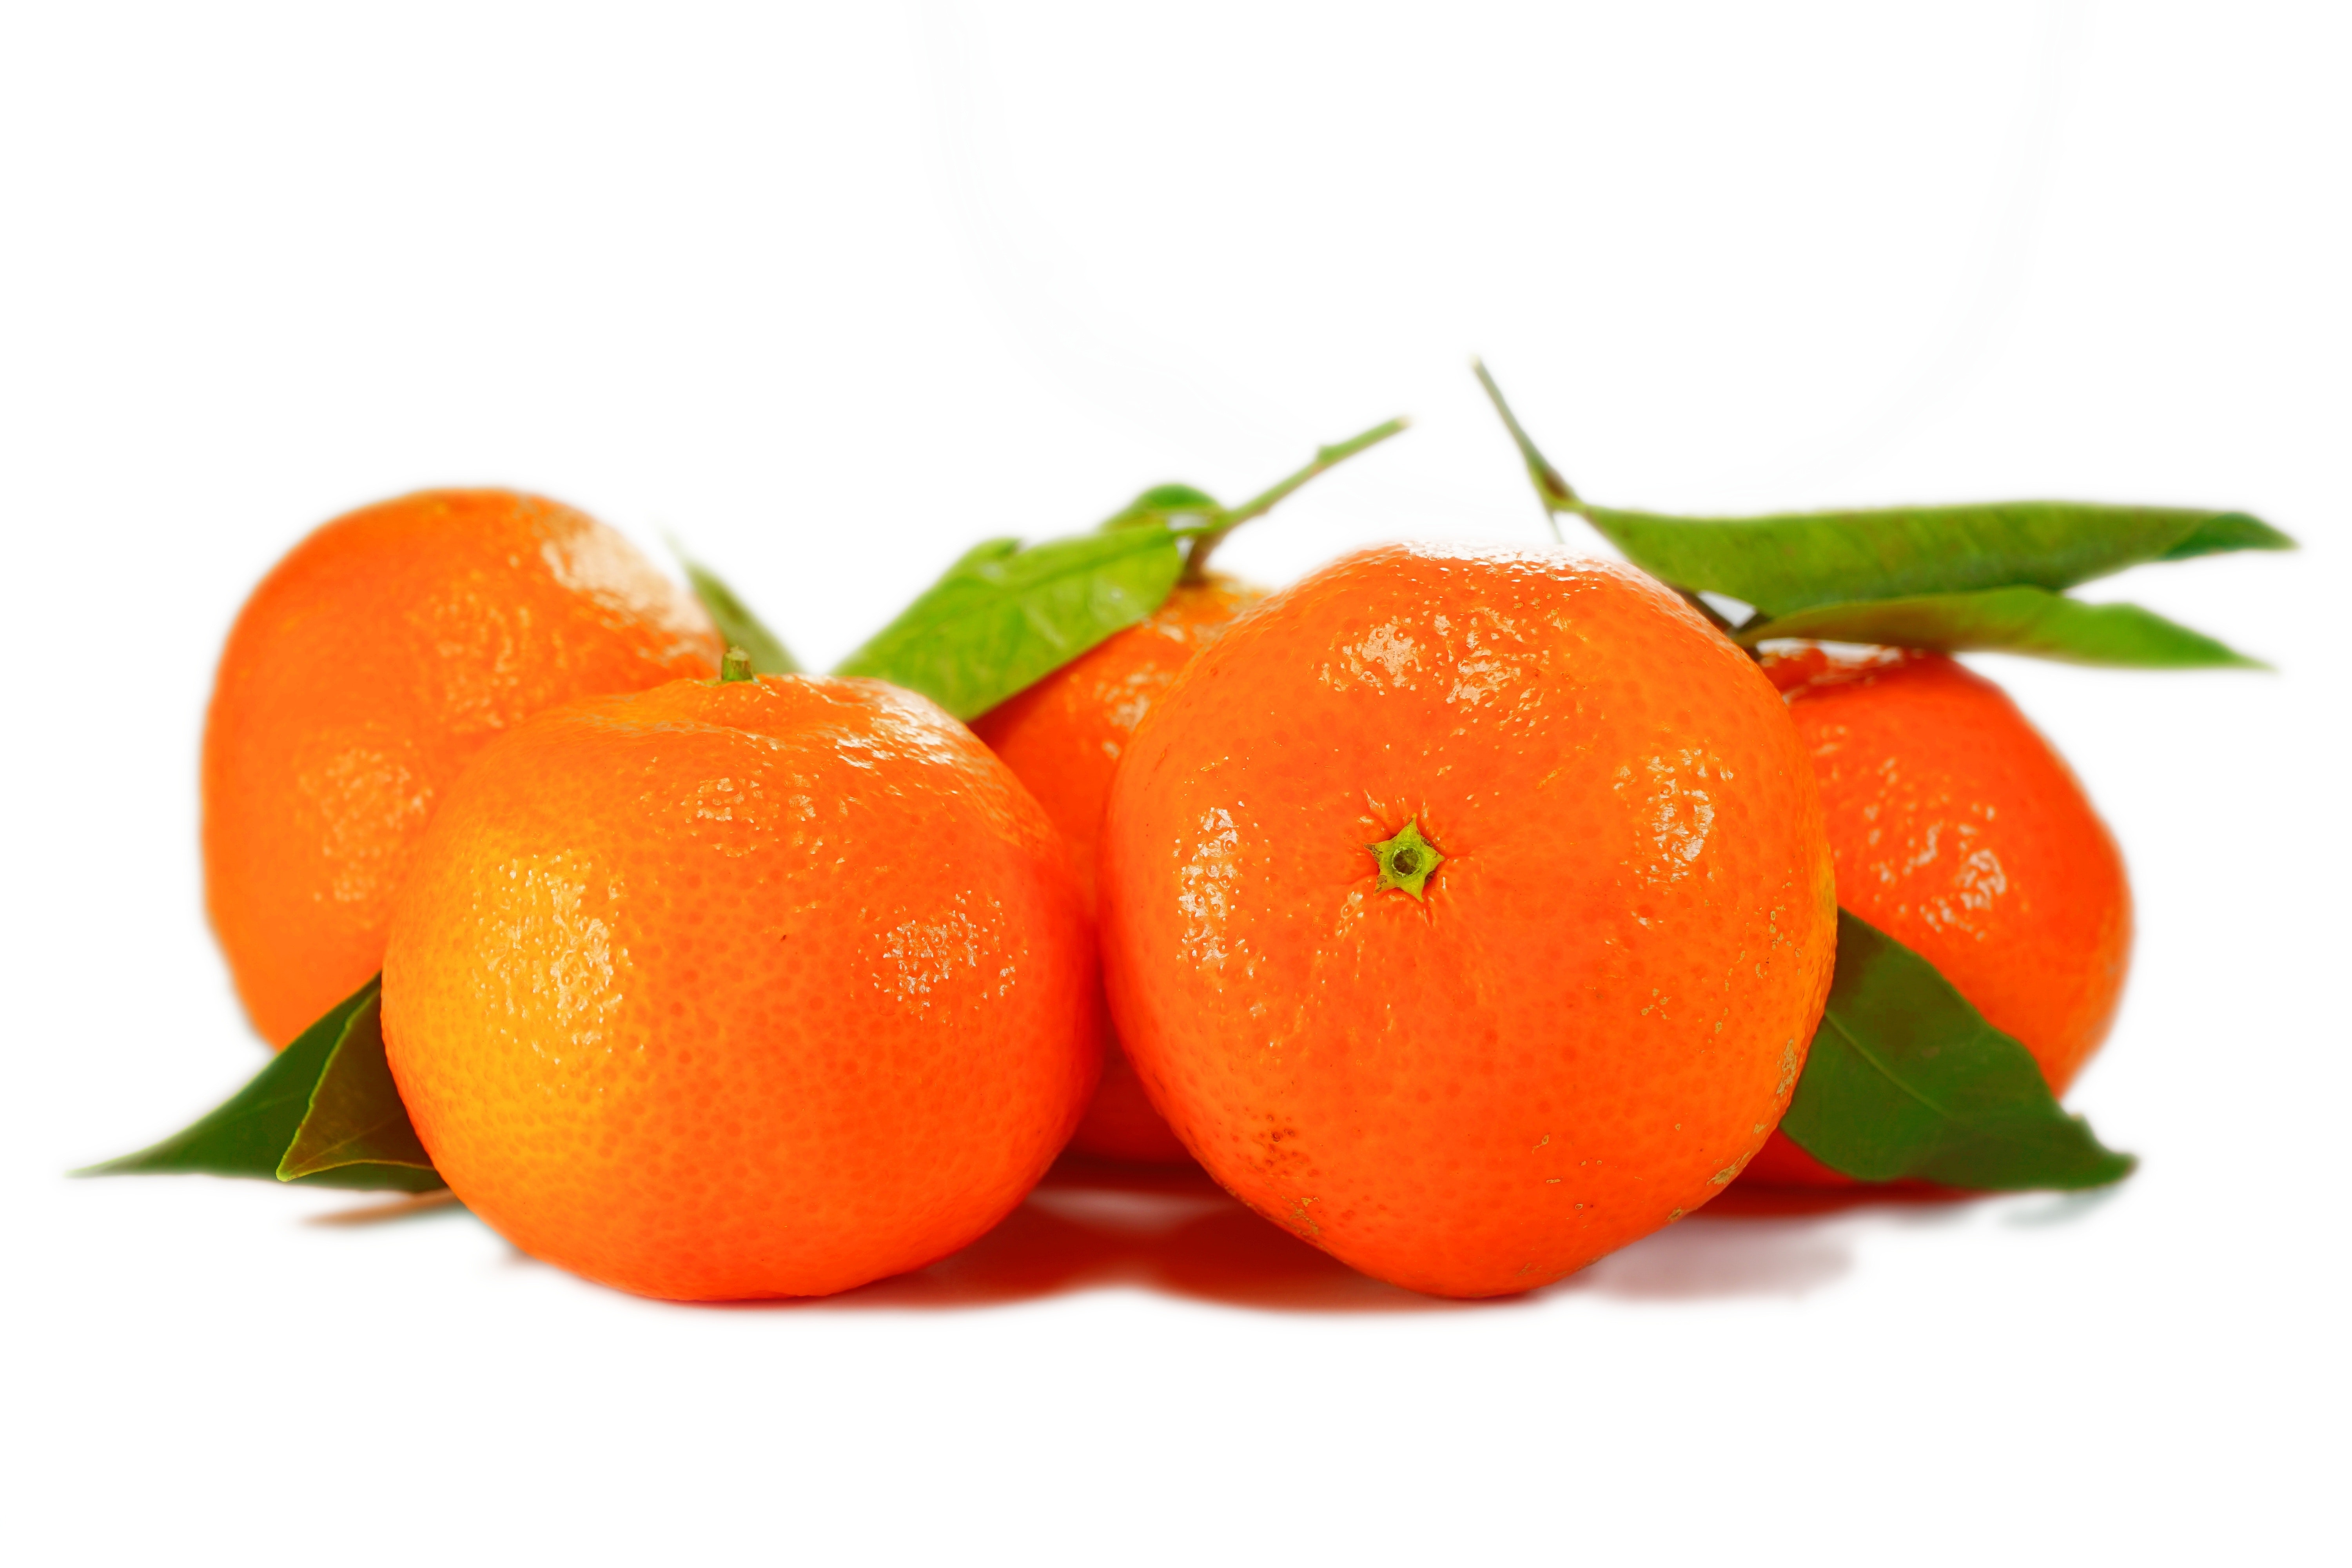 500+ Amazing Oranges Photos · Pexels · Free Stock Photos